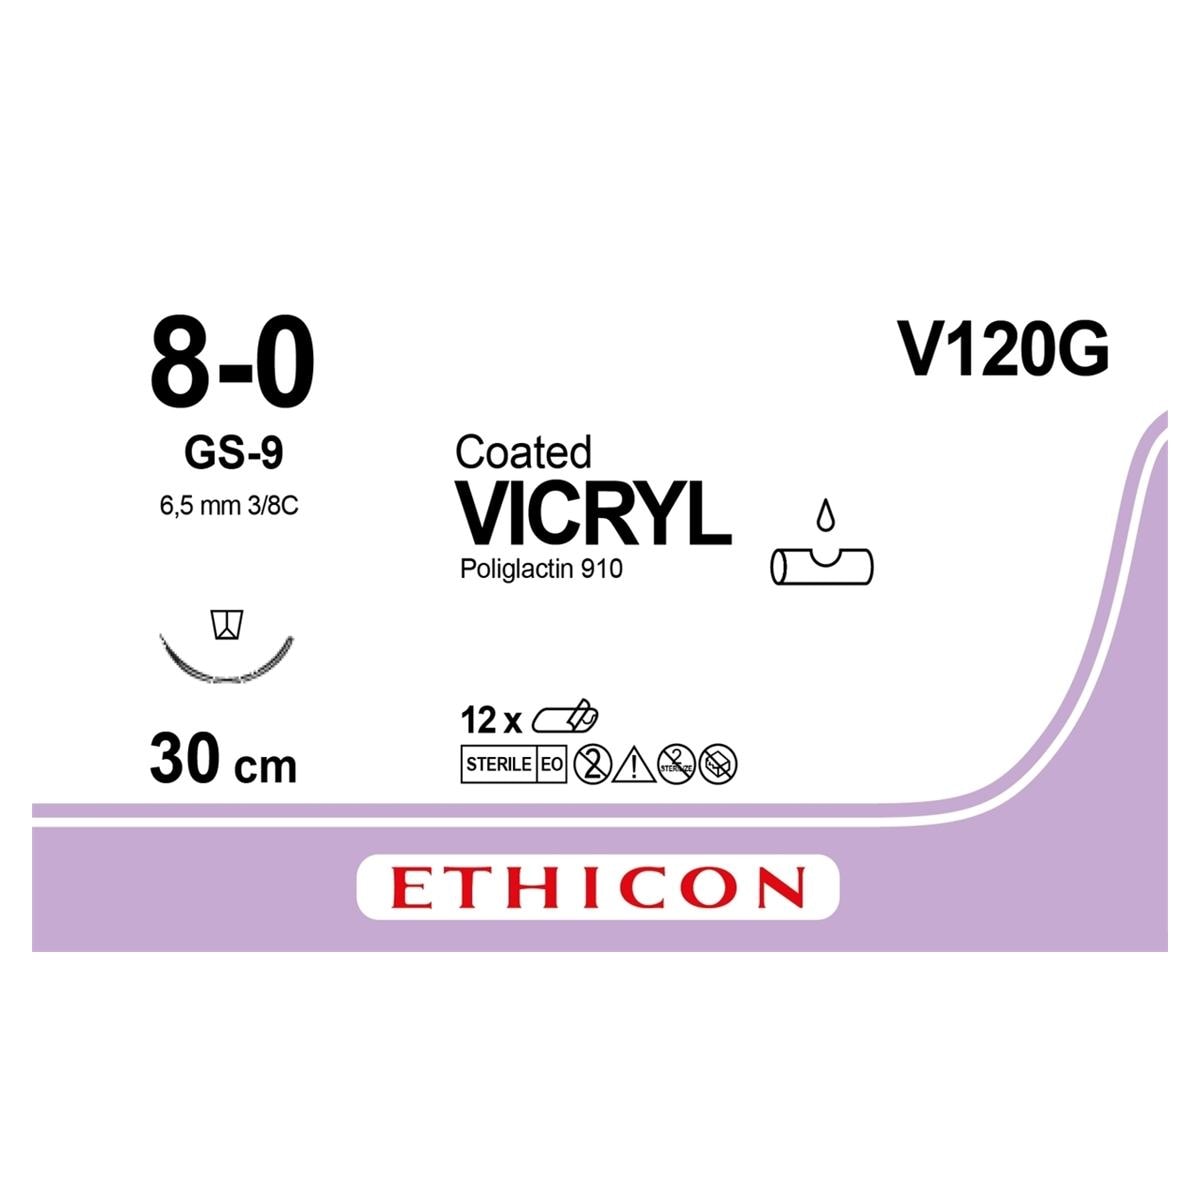 Vicryl - USP 8-0 GS9 30 cm violet V120G, per 12 stuks